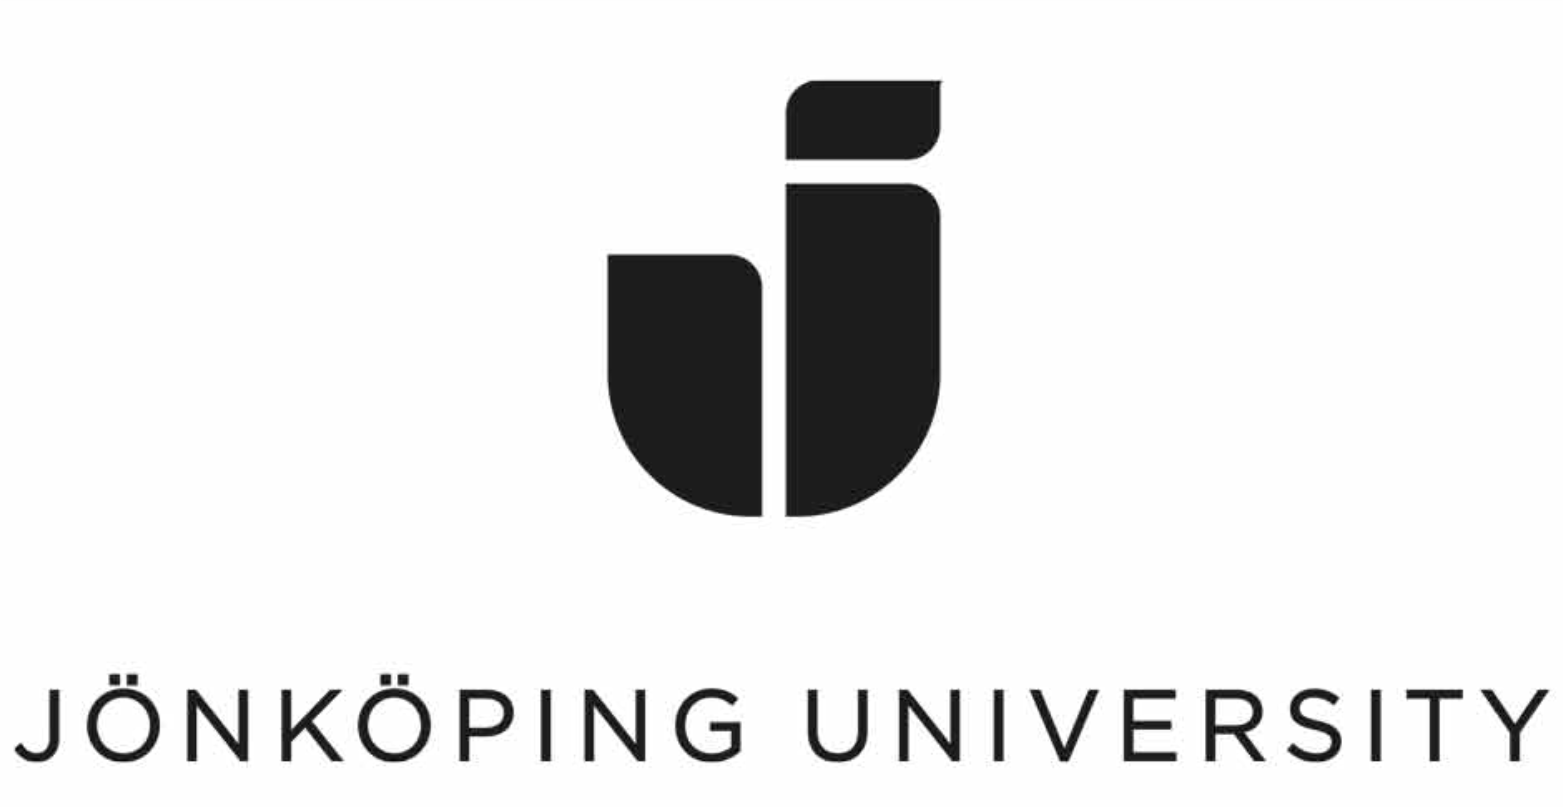 University of Jönköping